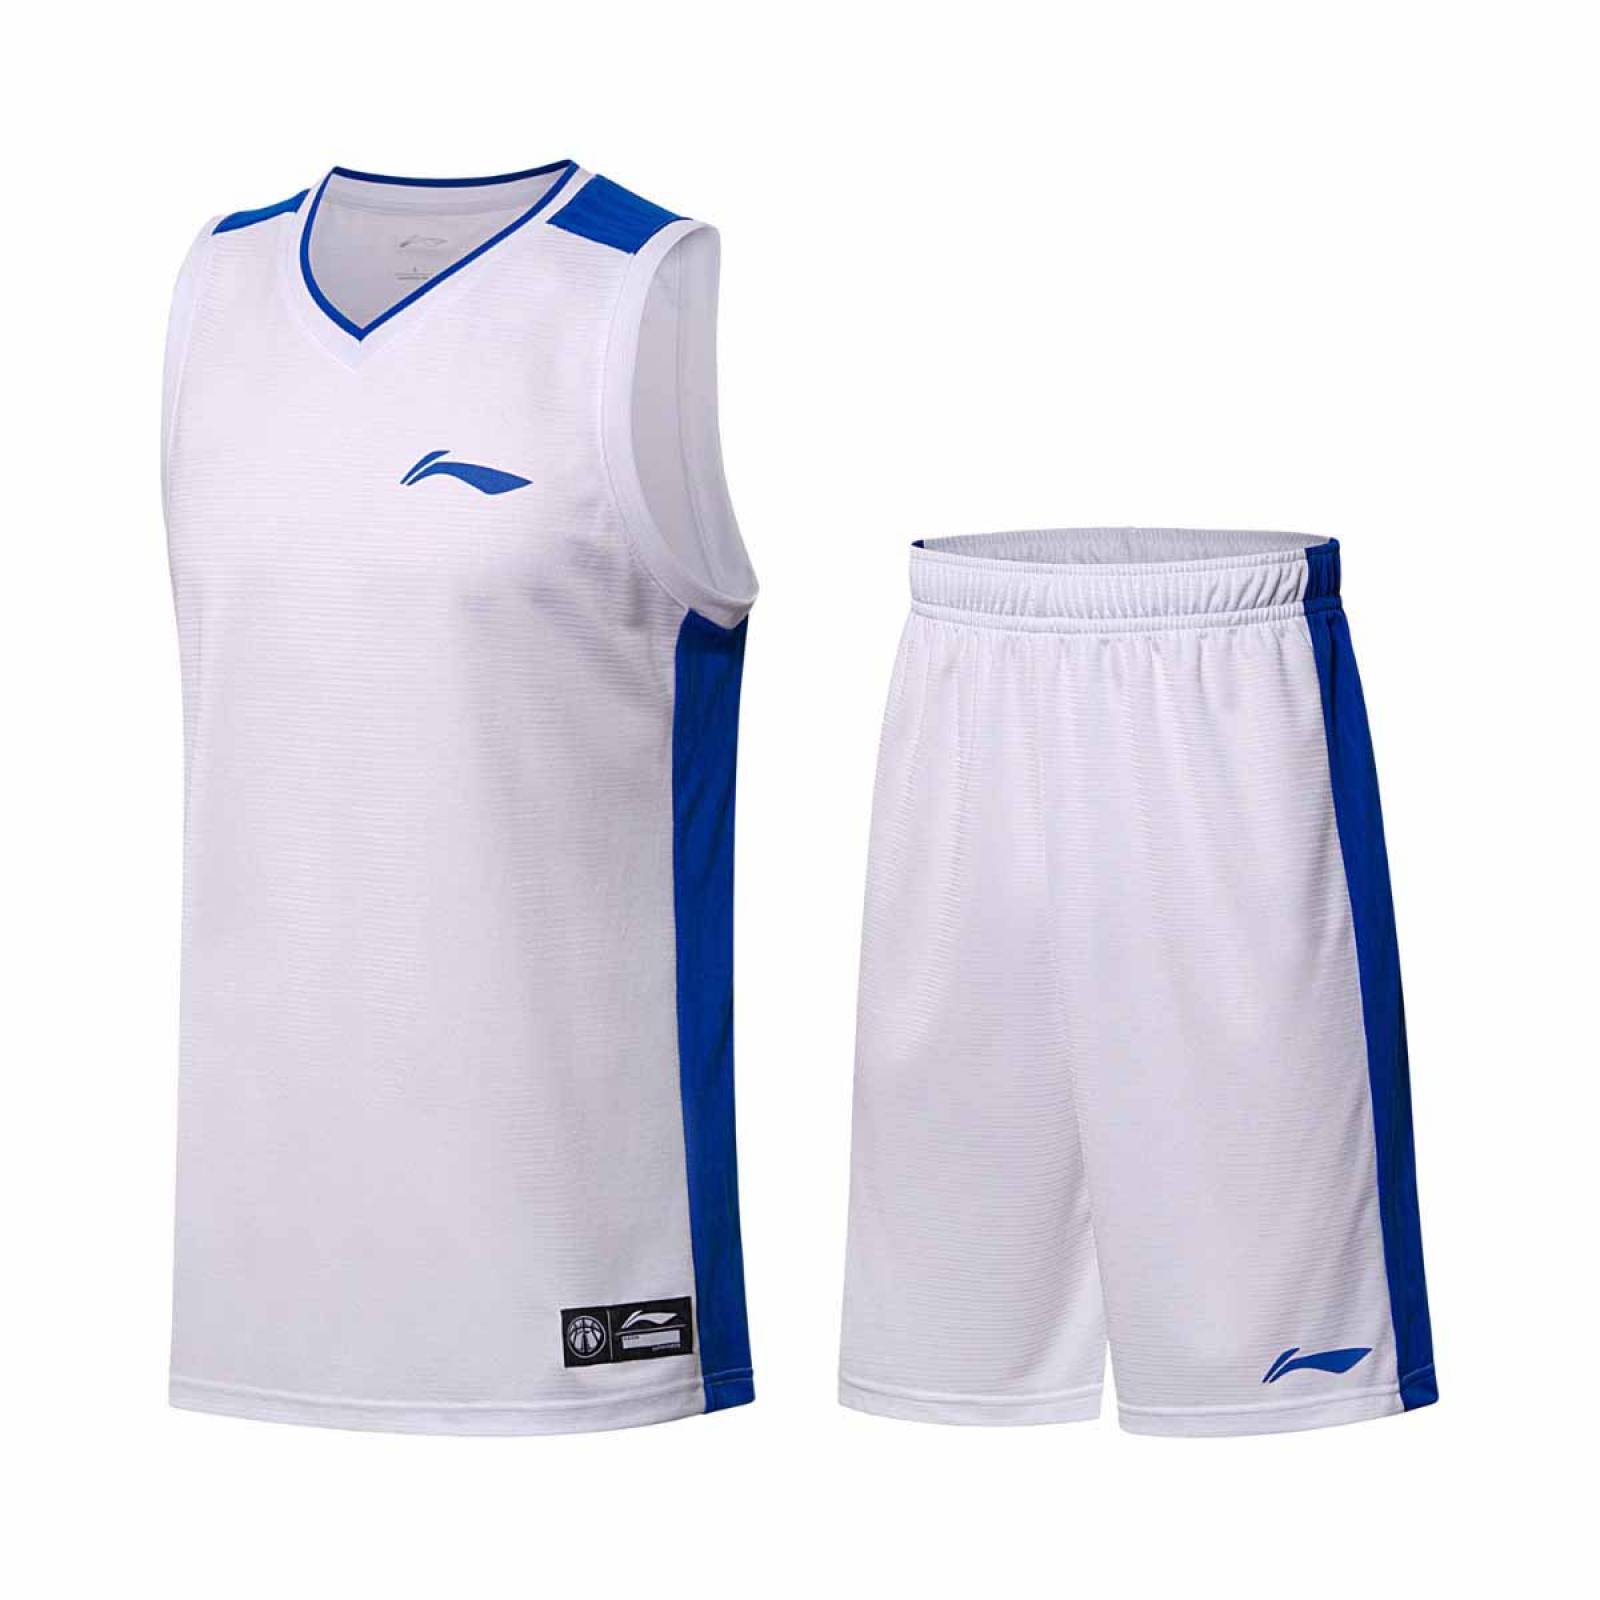 Conjunto de Playera y Shorts para Basketball AATN005-1 Blanco Li-Ning Caballero